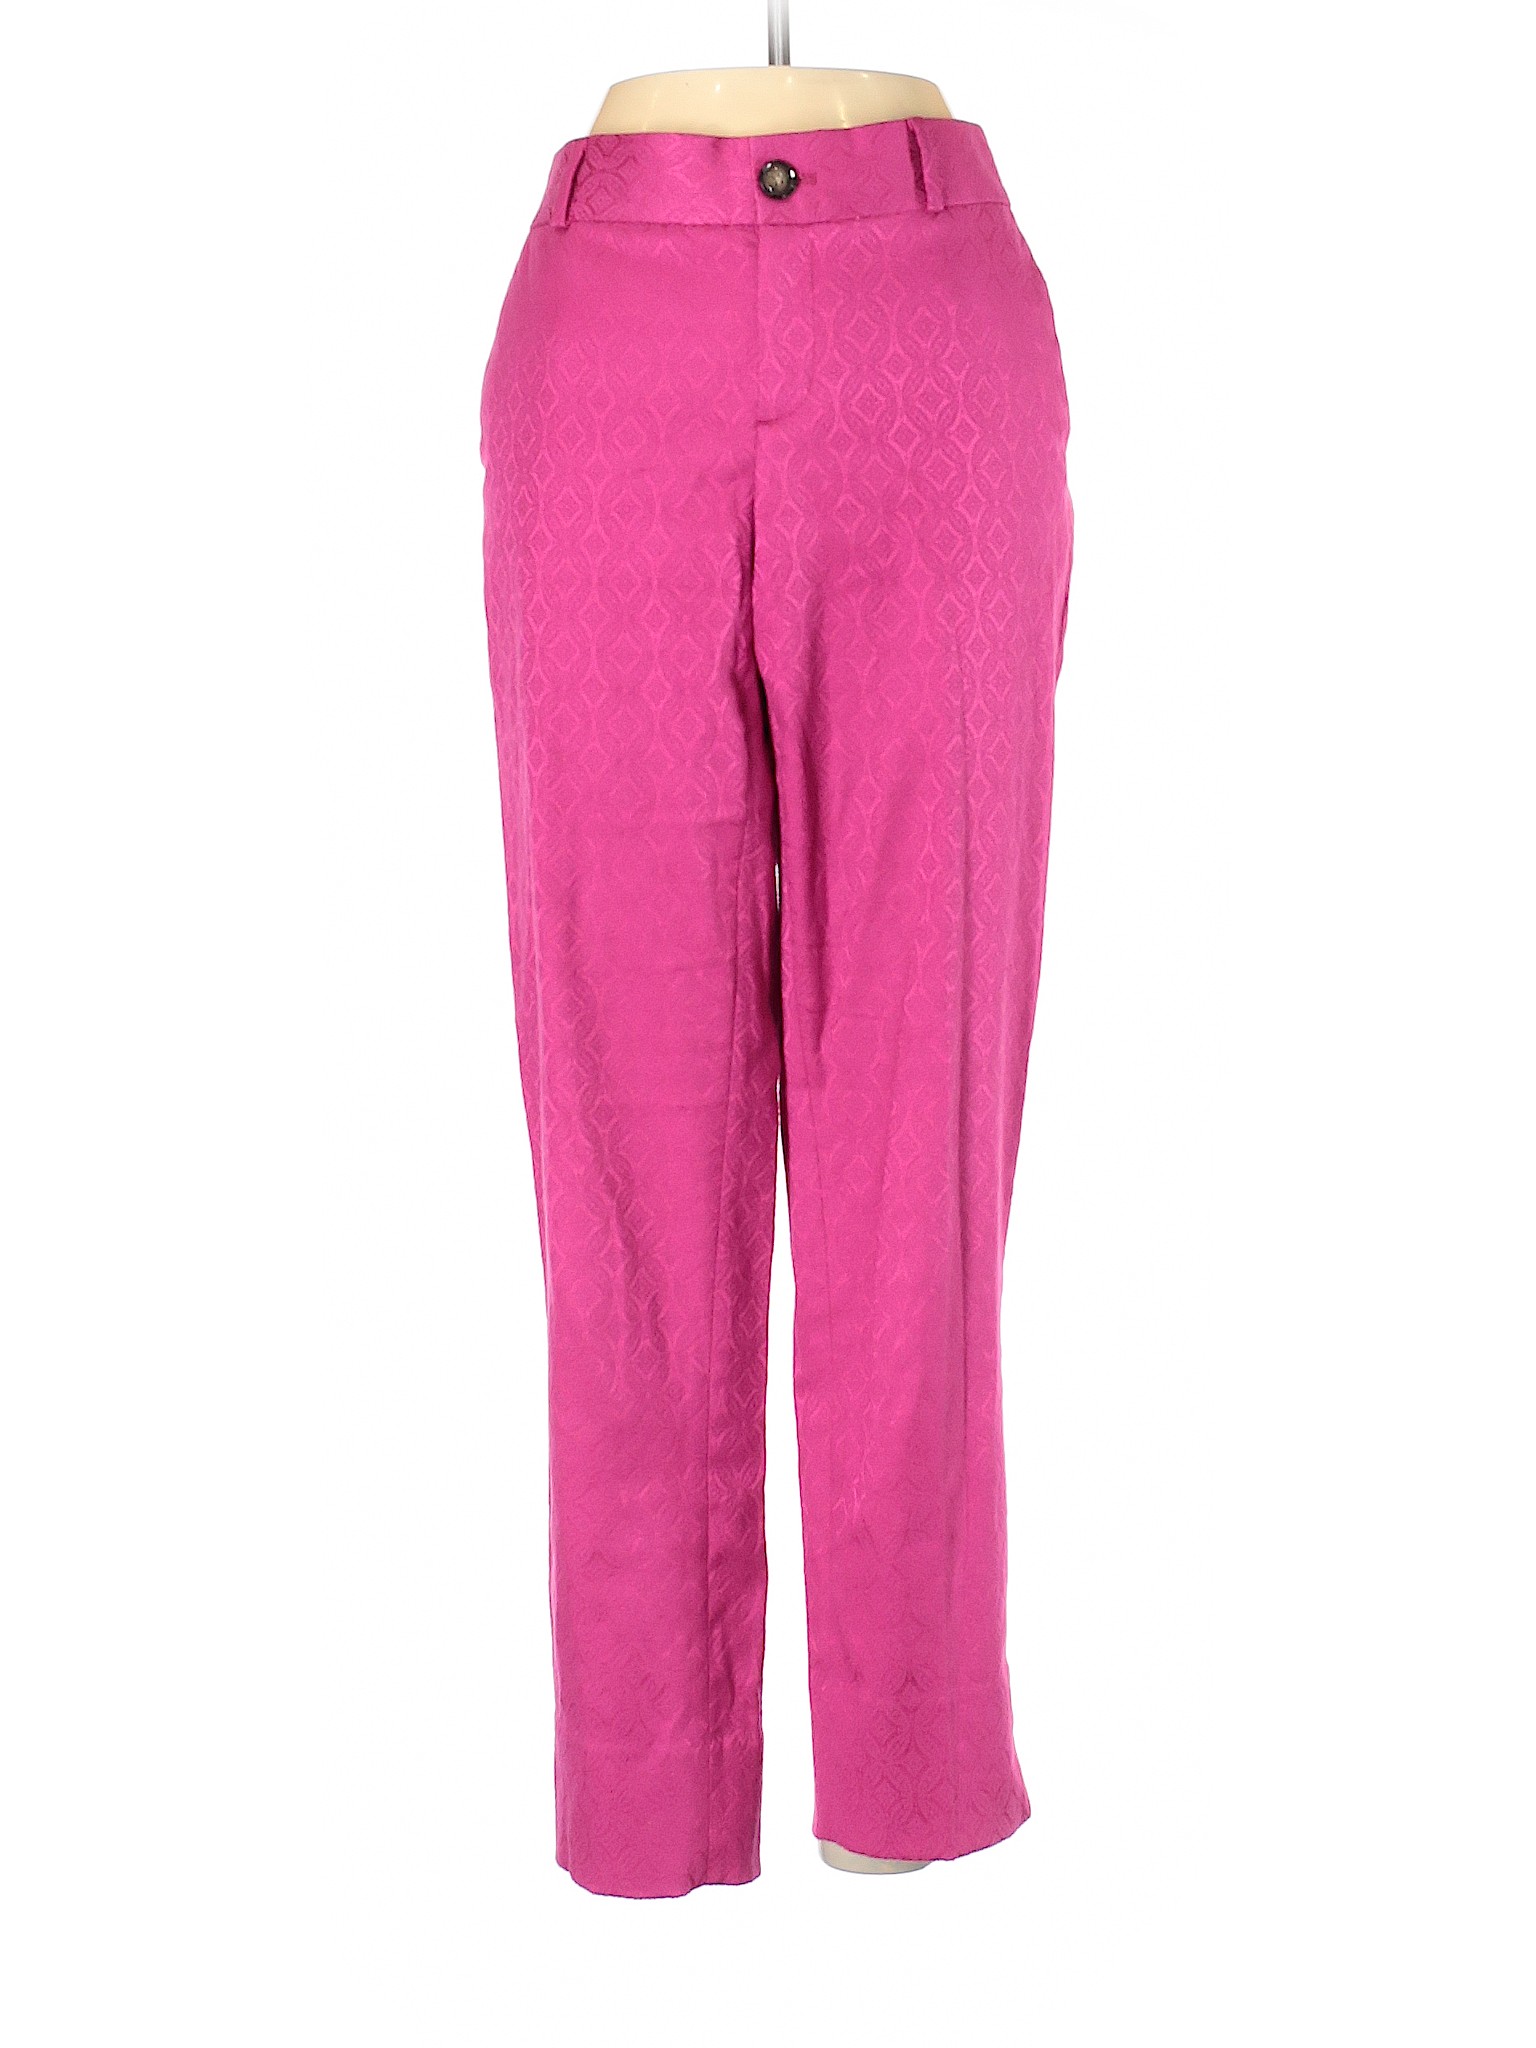 Banana Republic Women Pink Casual Pants 2 | eBay